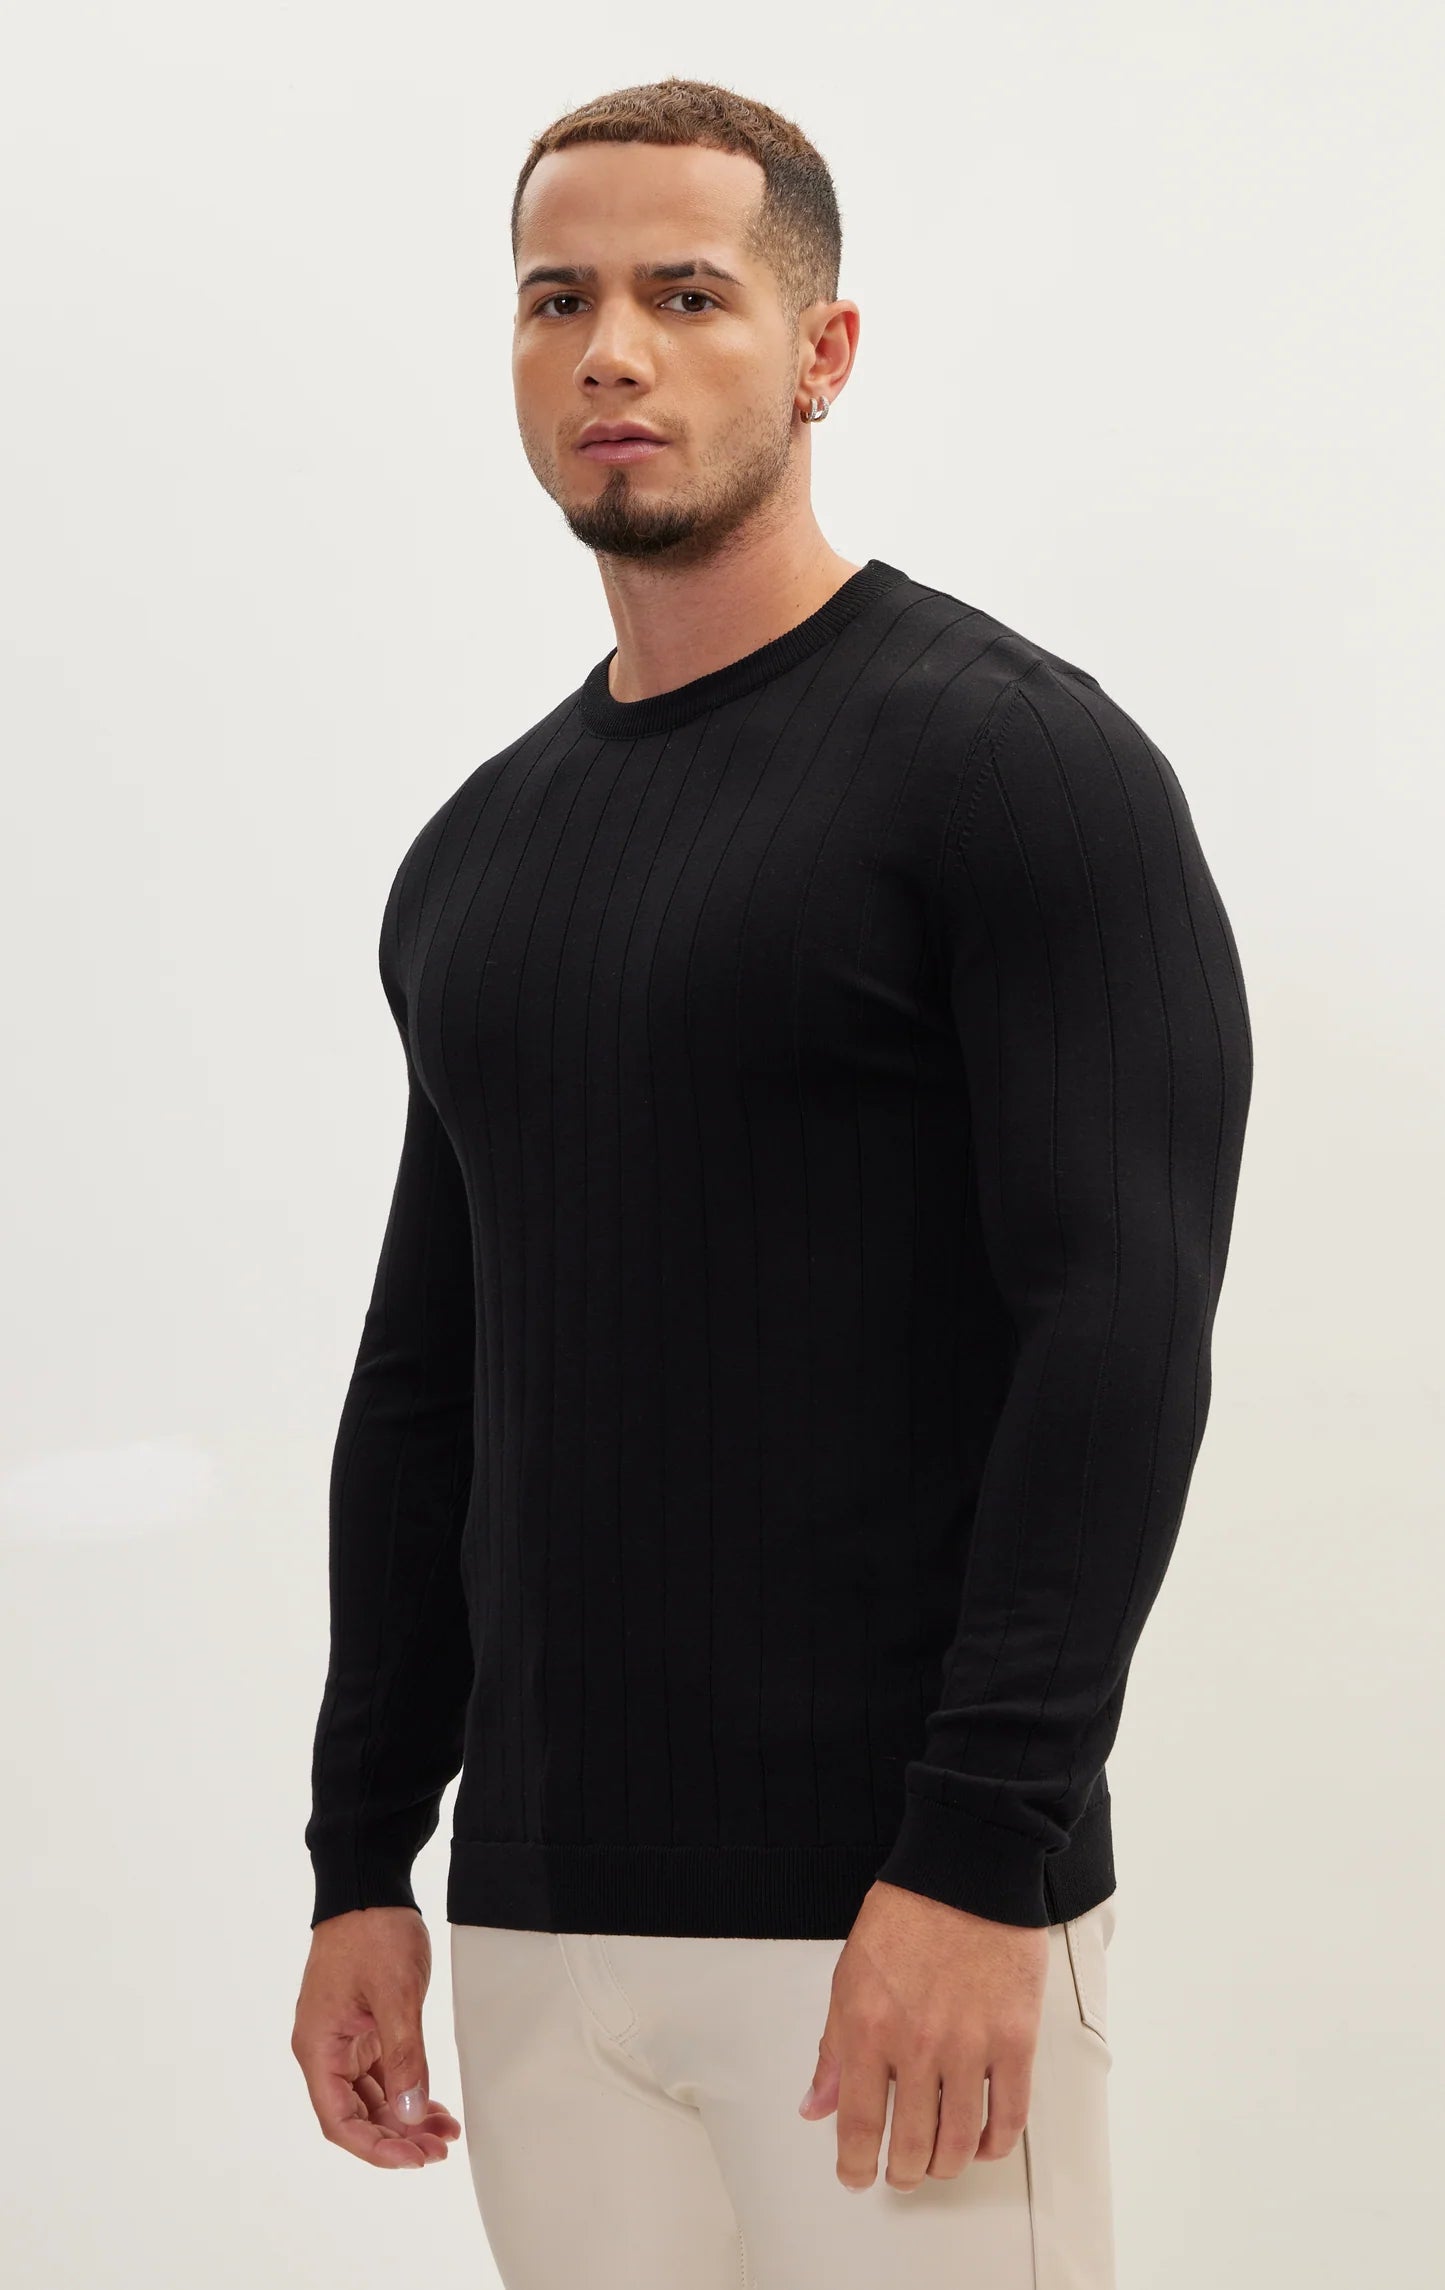 Slip-Stitch Crew neck long sleeve sweater - Black